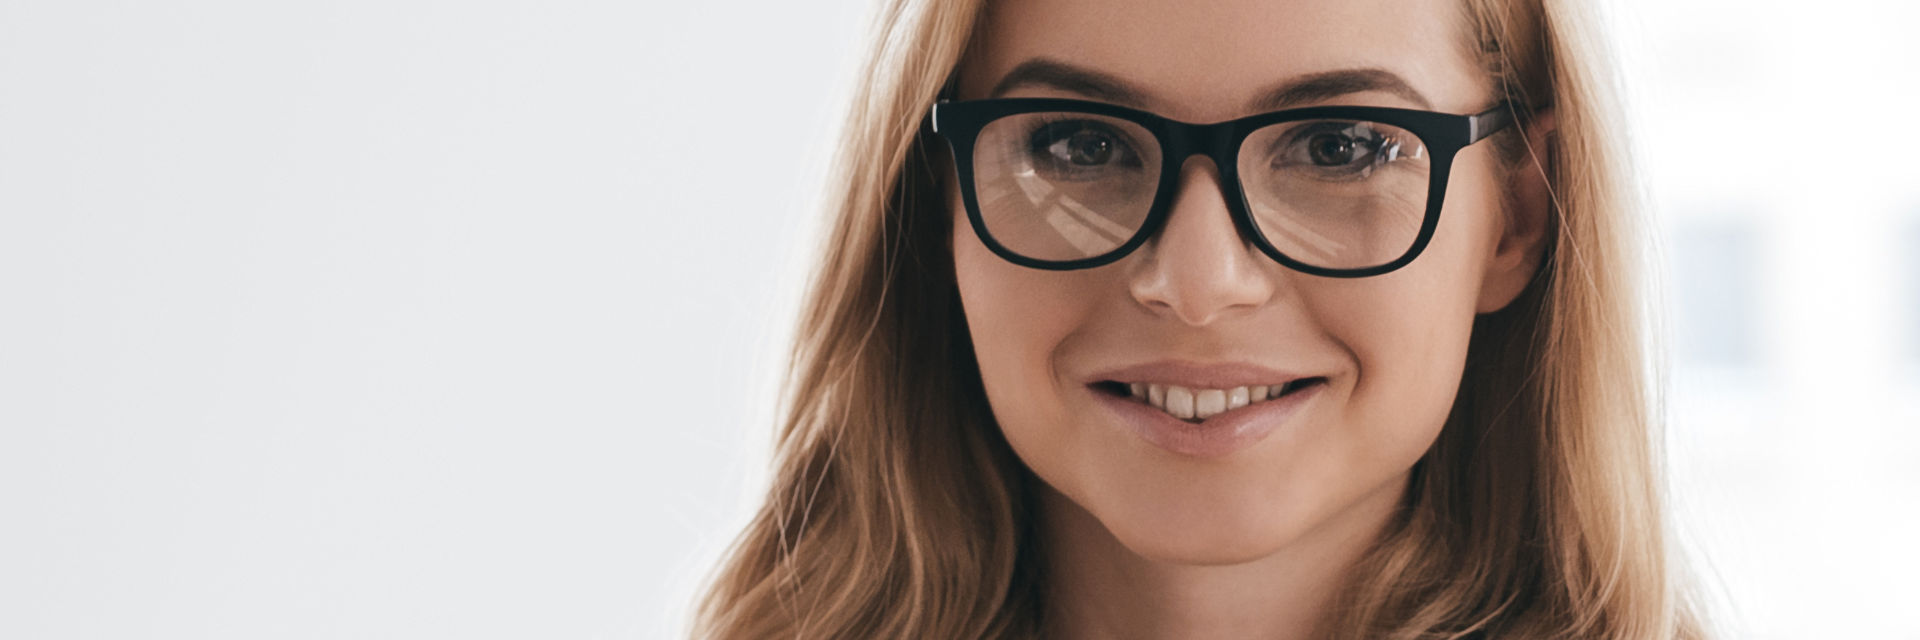 Woman wearing glasses showing beautiful teeth in her smile.